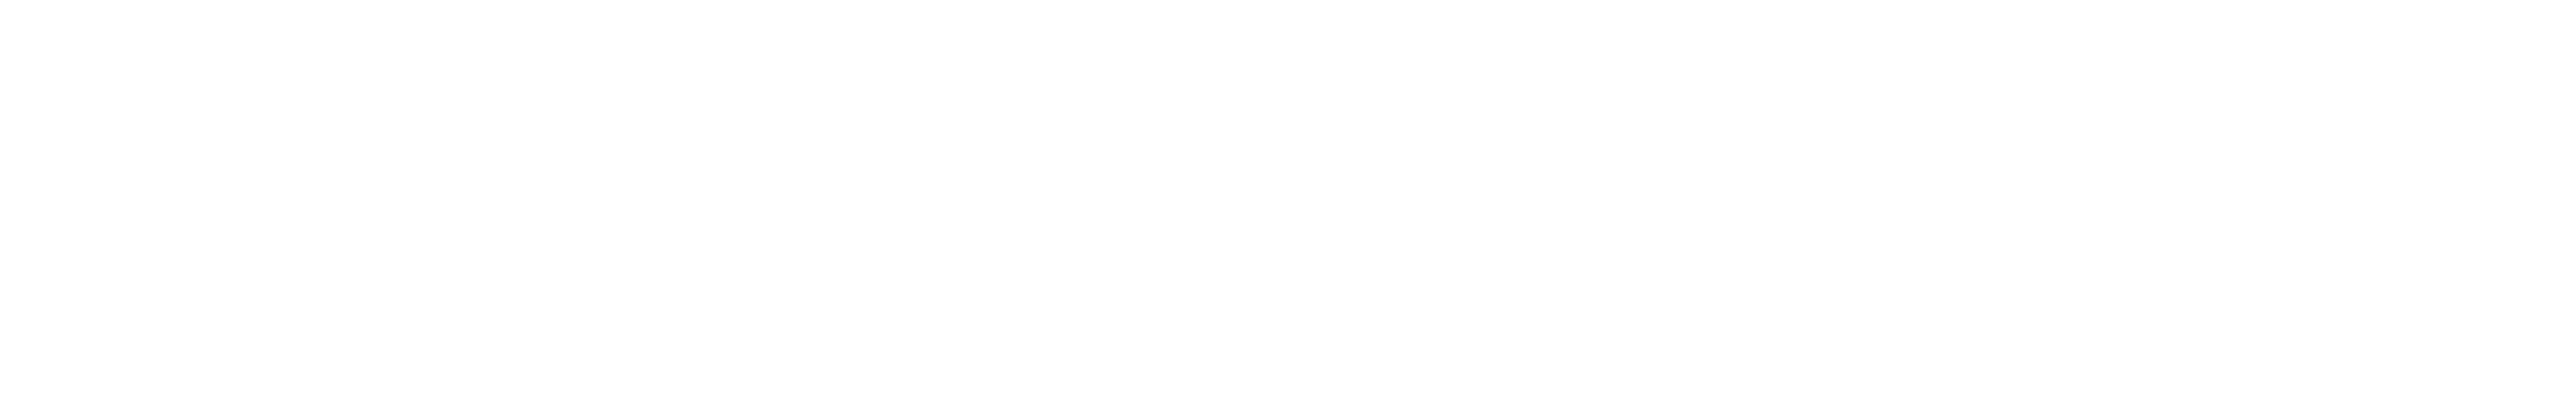 Anthem Health logo